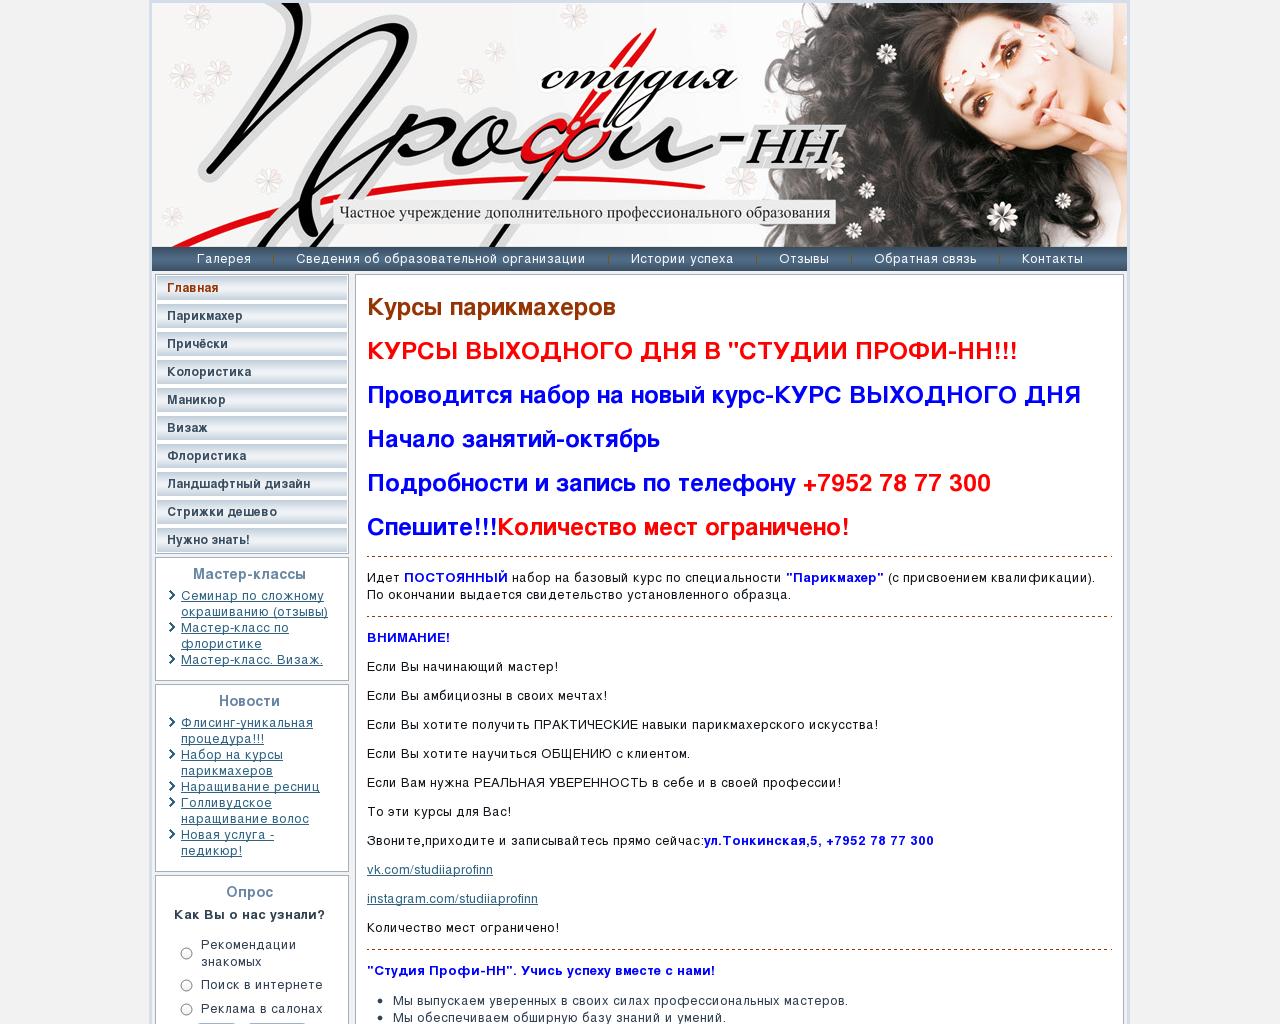 Изображение сайта nou-profi-nn.ru в разрешении 1280x1024